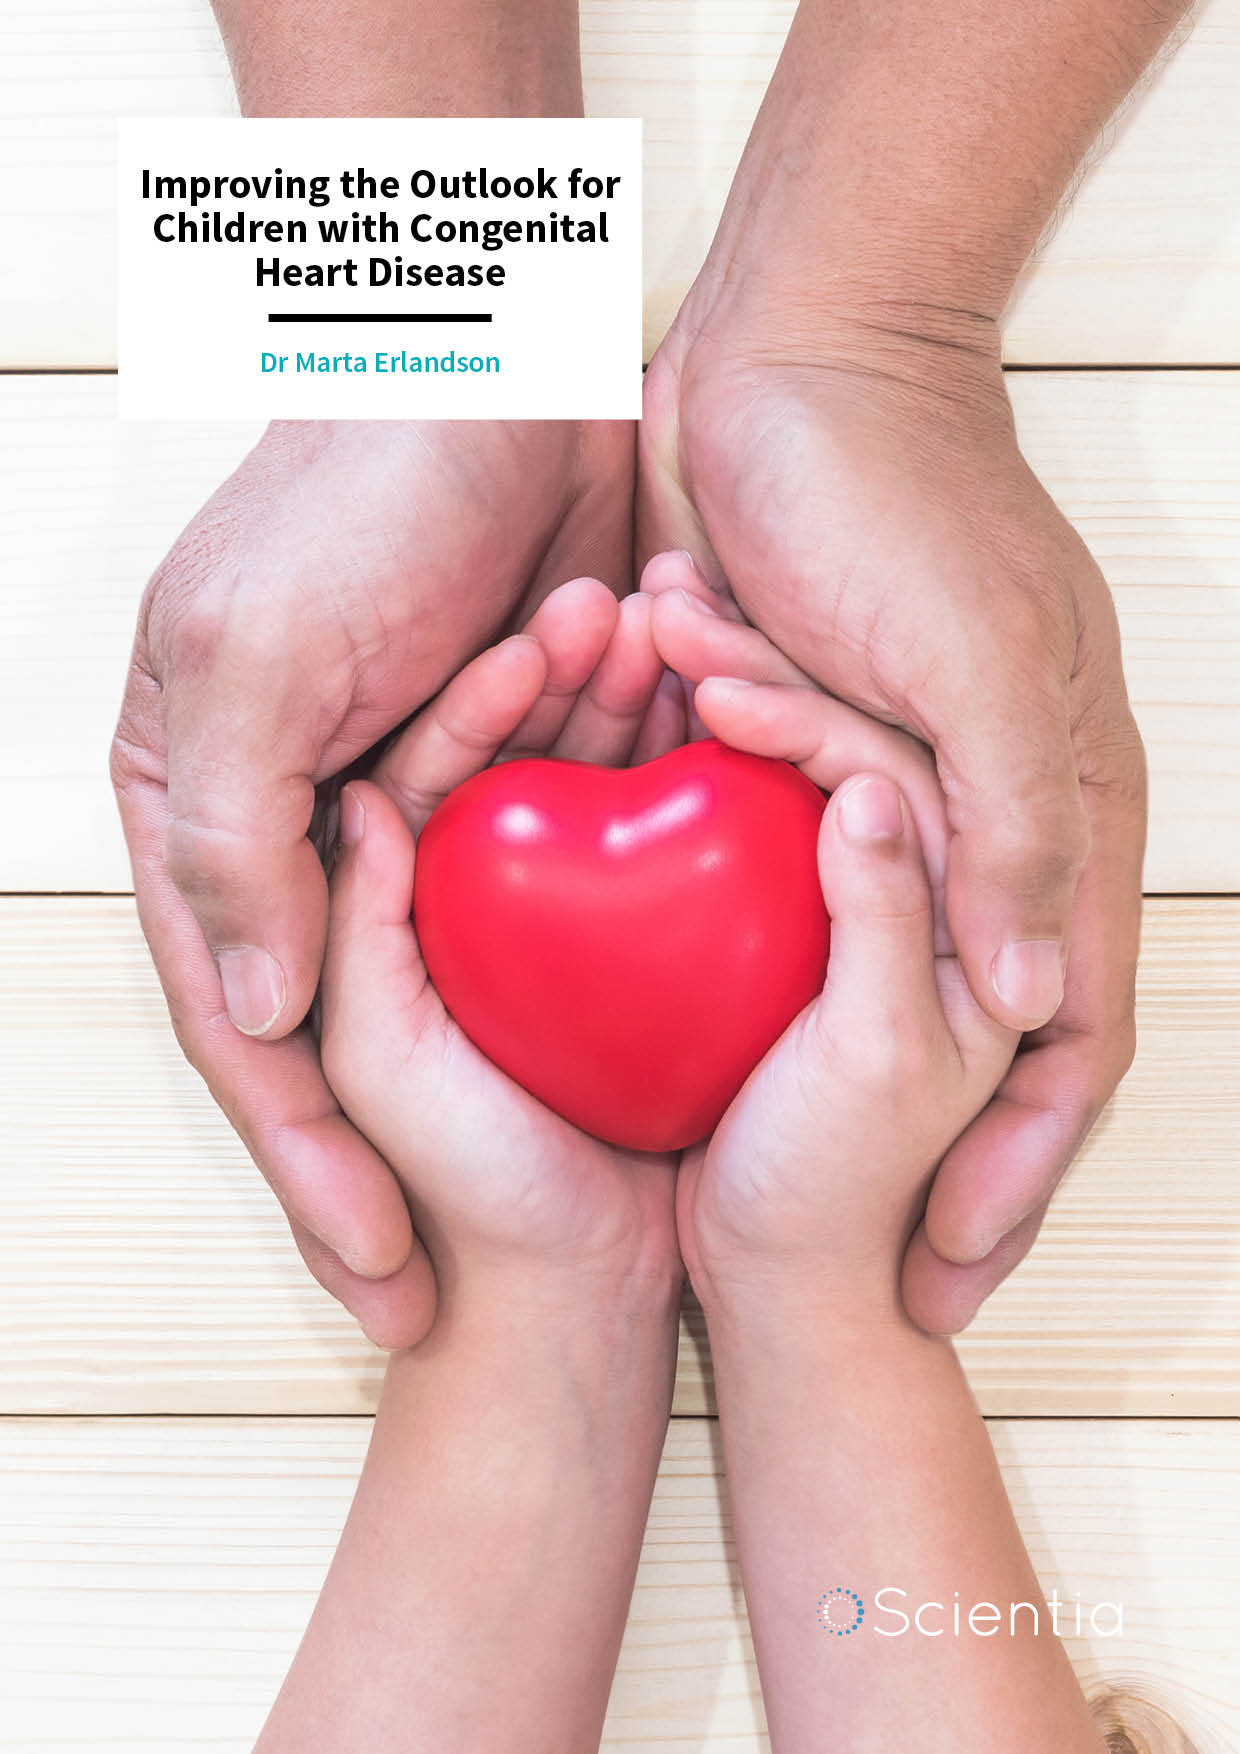 Dr Marta Erlandson – Improving the Outlook for Children with Congenital Heart Disease